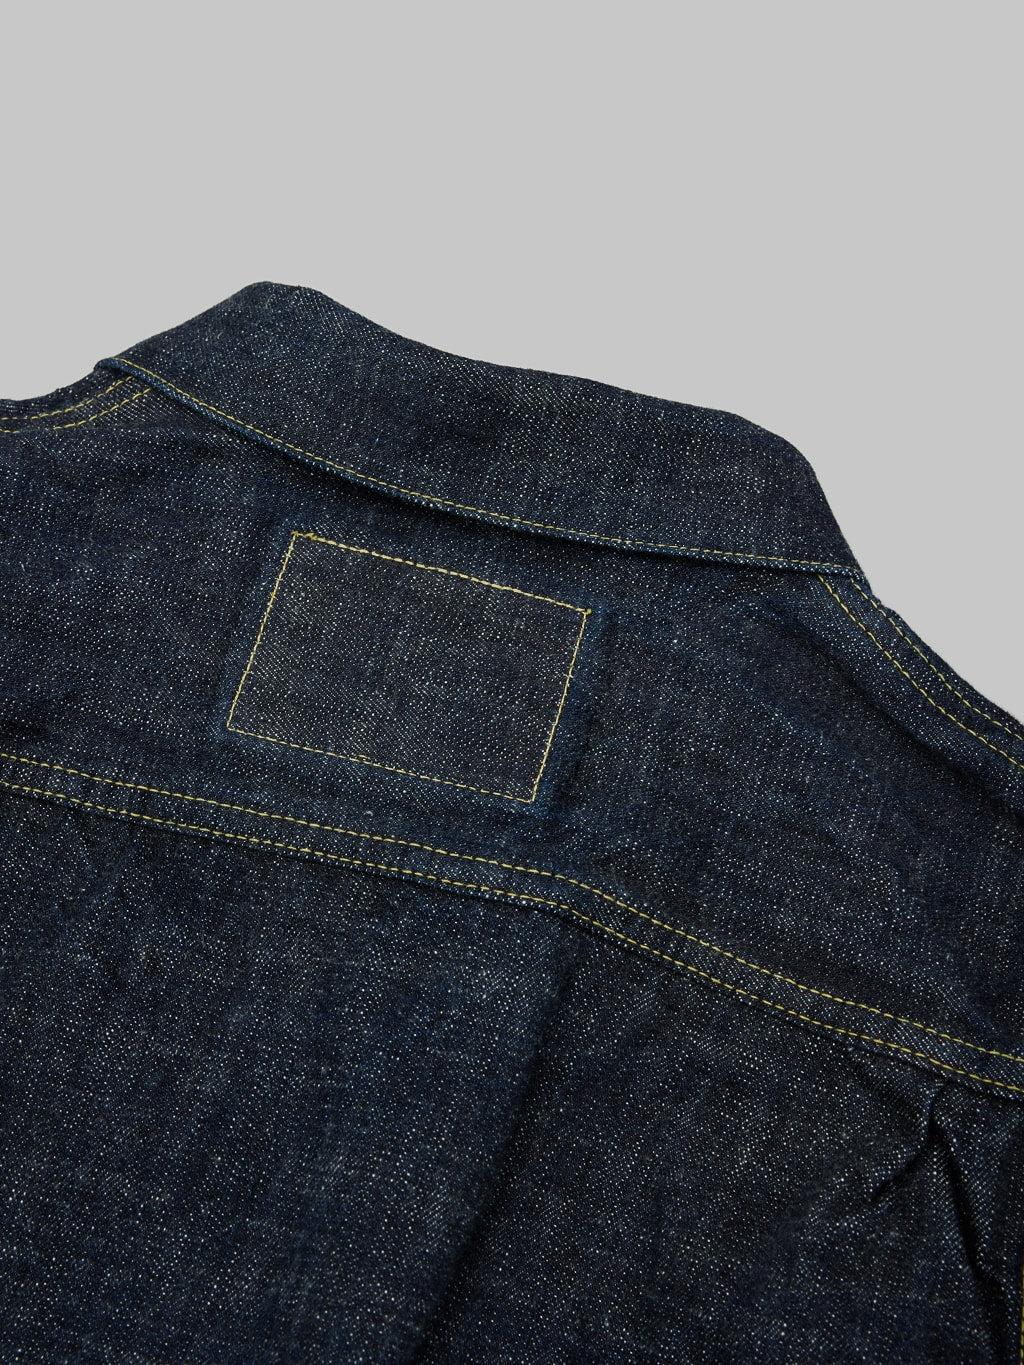 Fob factory Type III denim jacket stitching detail